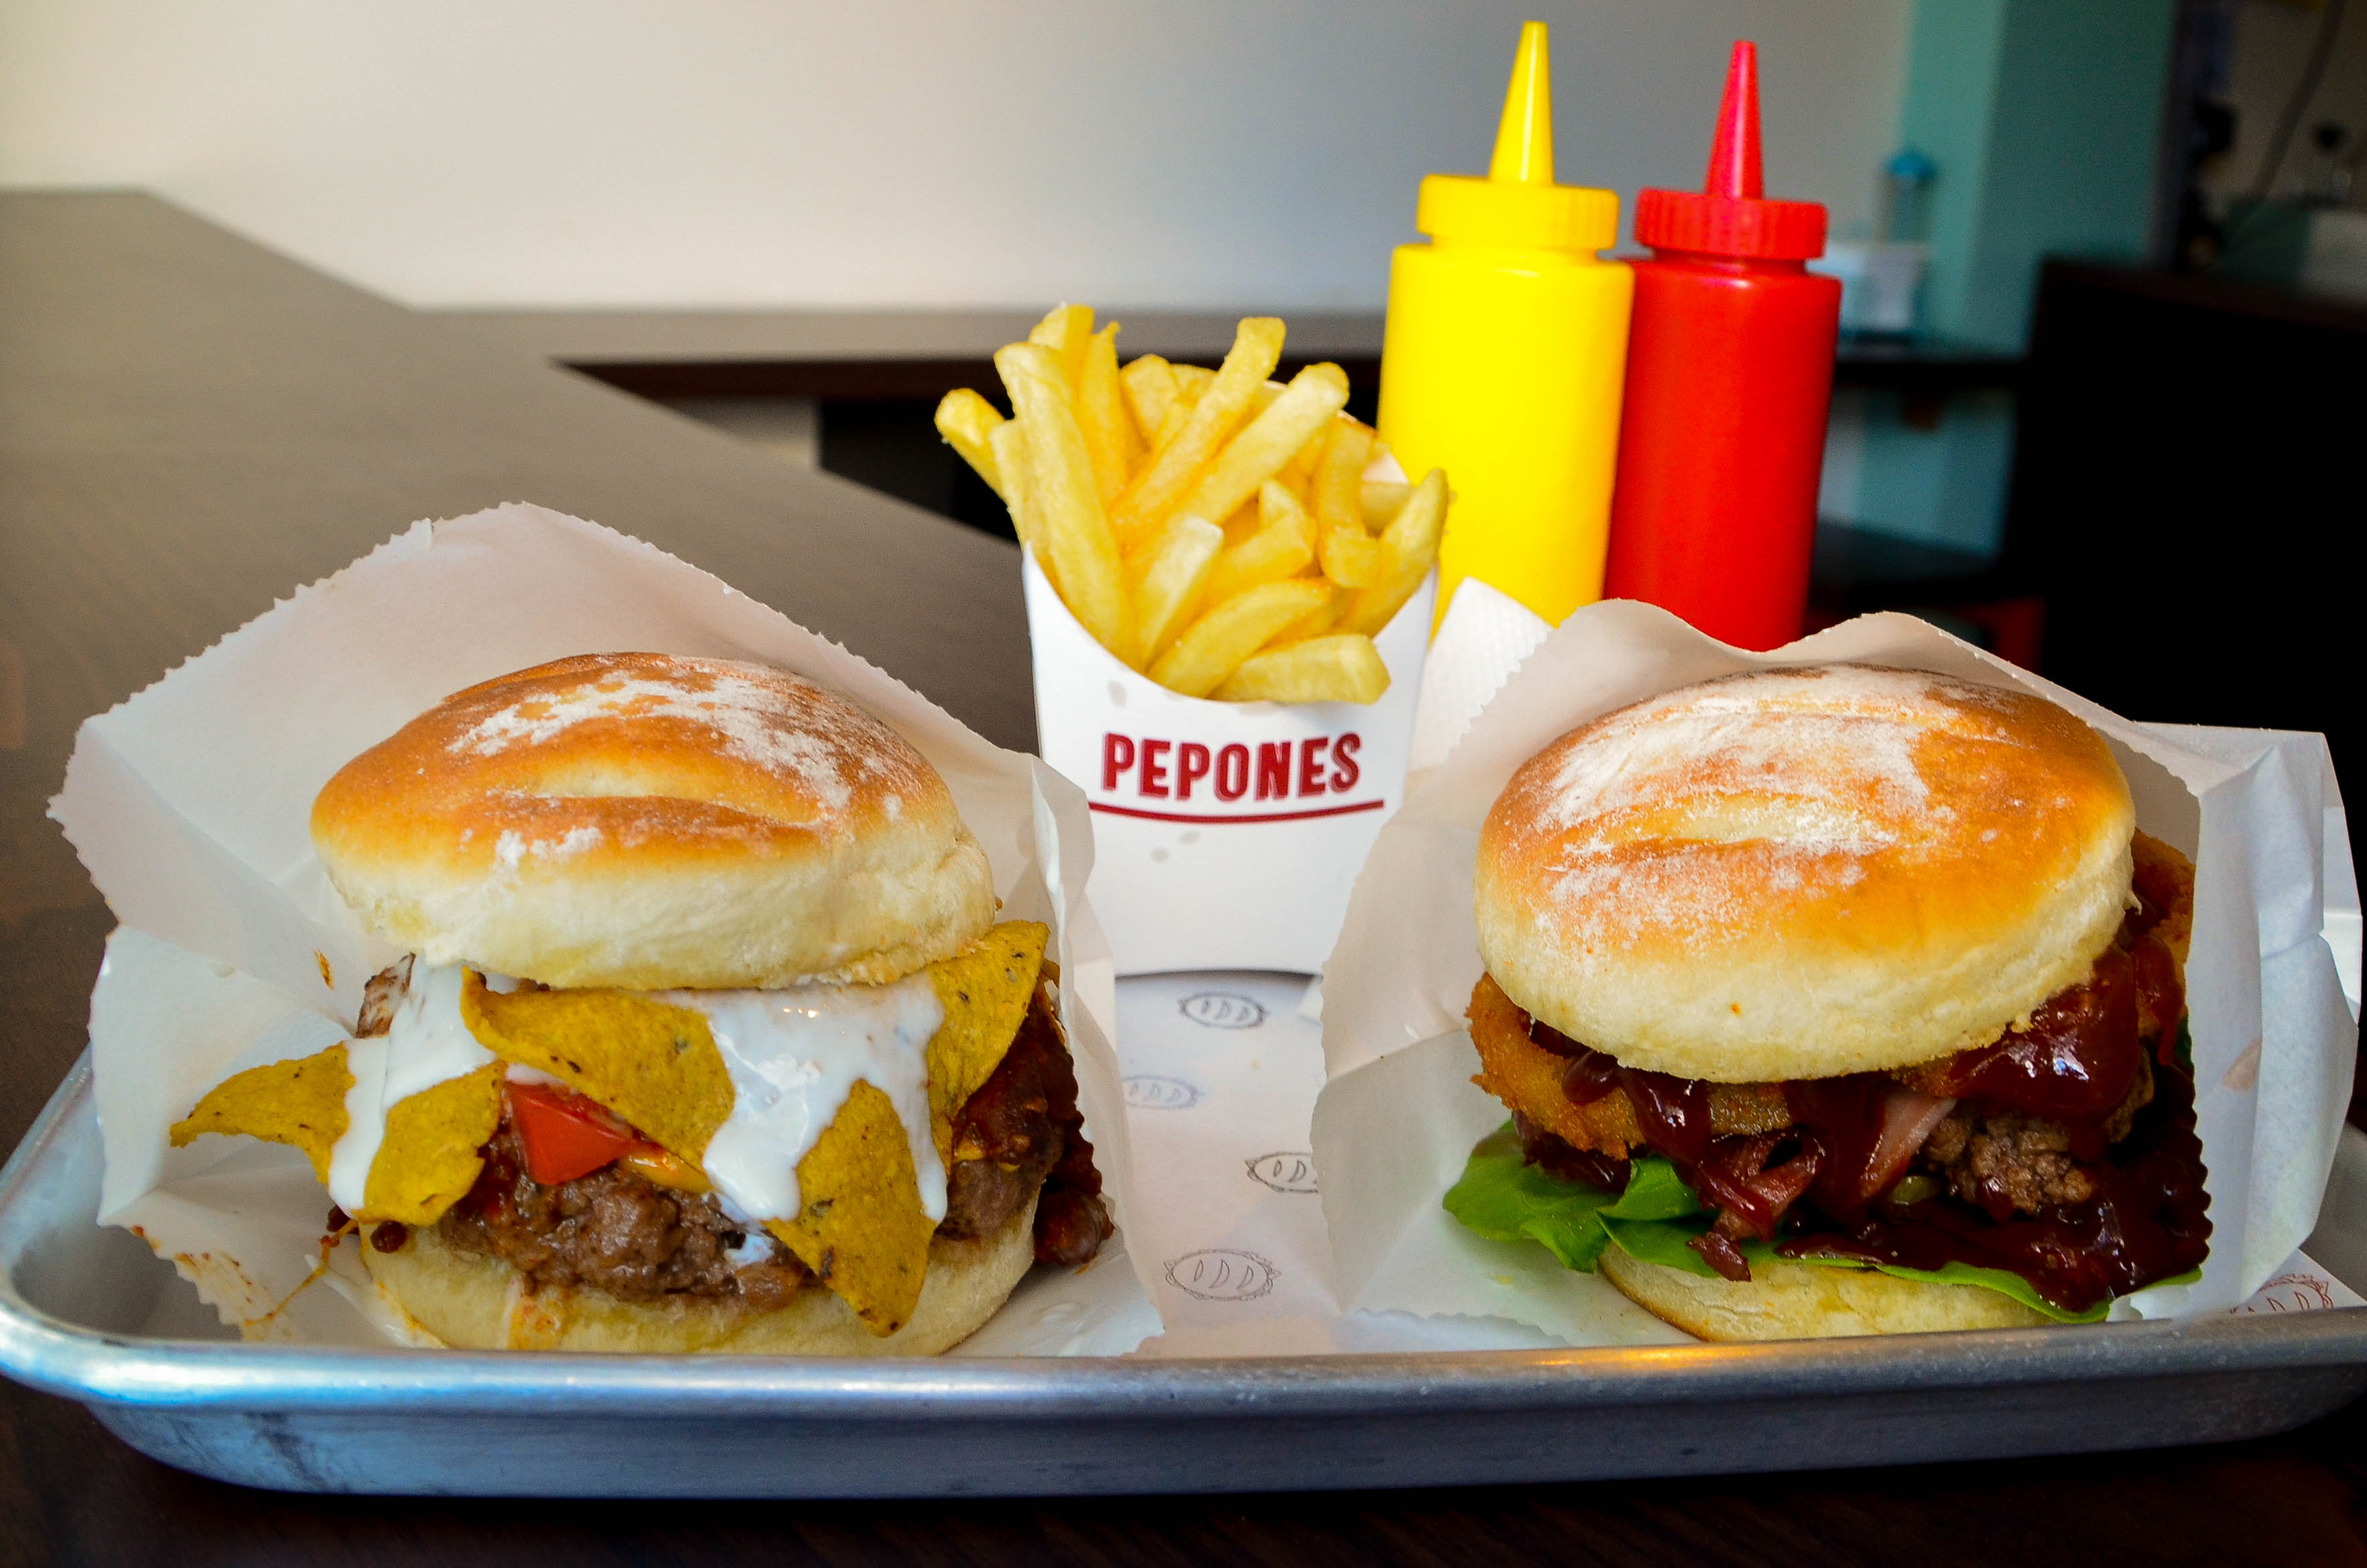 Pepones Burger shop (@peponesburger) • Instagram photos and videos